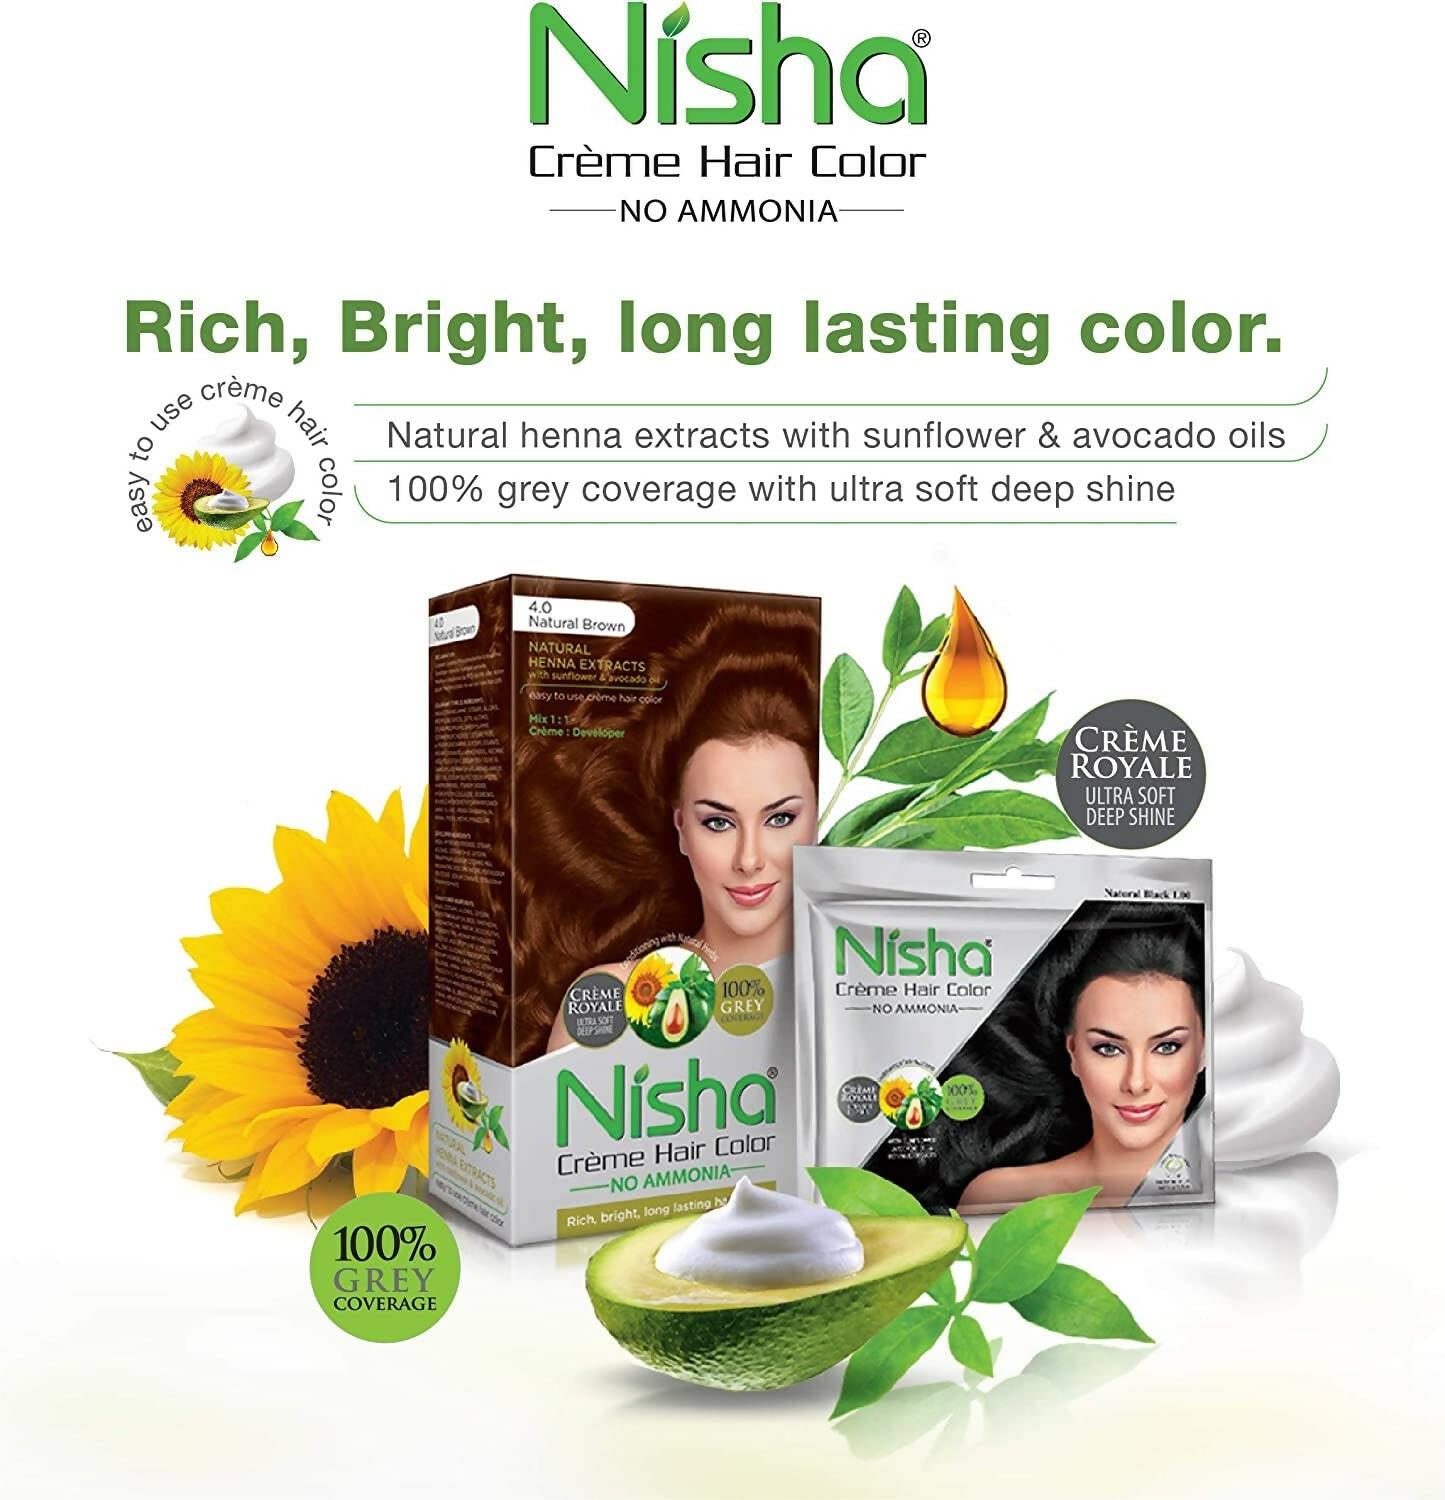 Nisha Creme Hair Color Chocolate Blonde